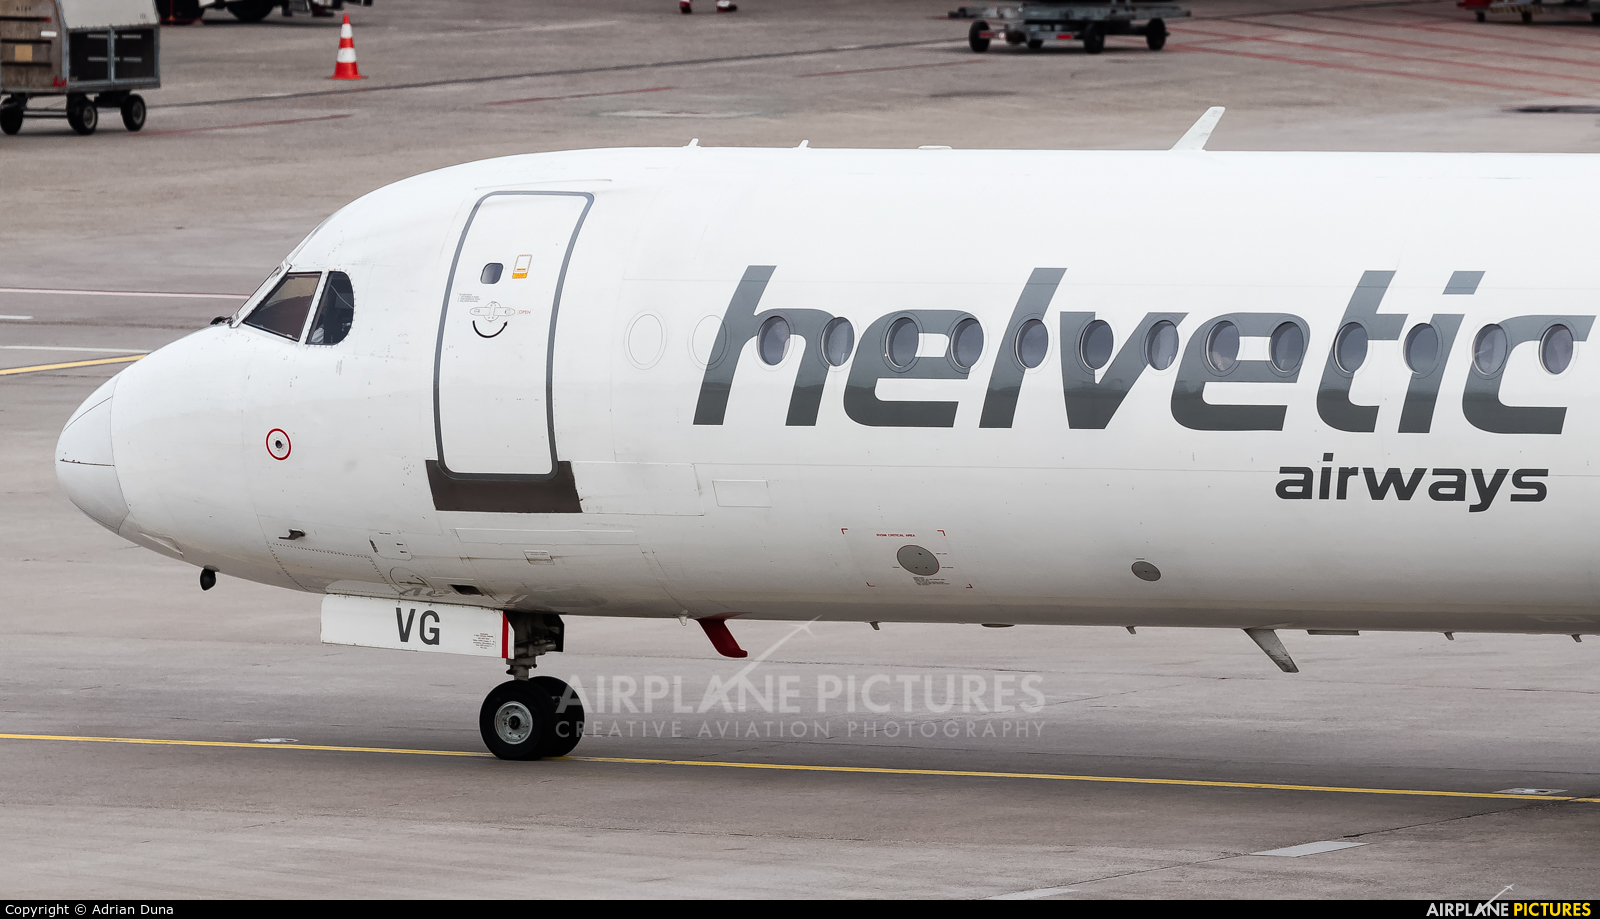 Helvetic Airways HB-JVG aircraft at Zurich